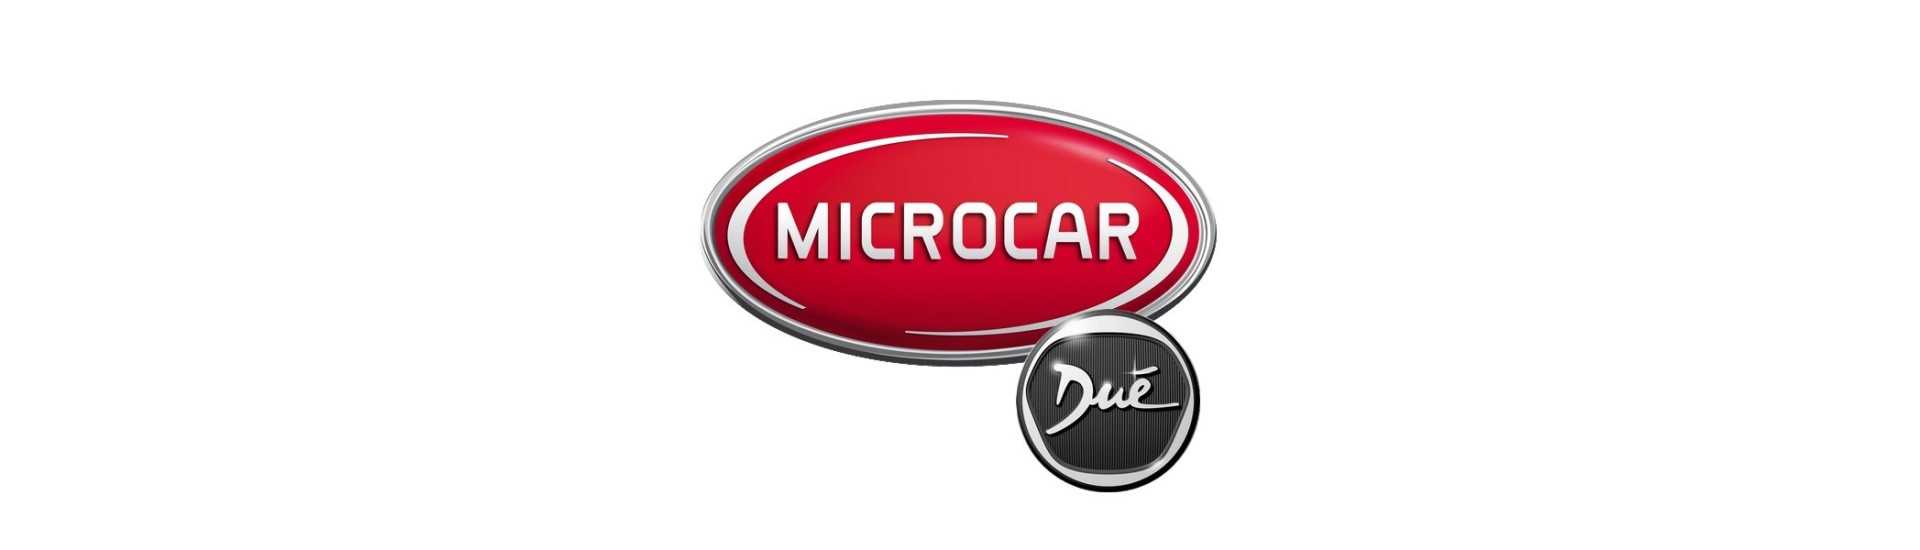 Parhaat hinnat ilman lupaa Microcar Dué